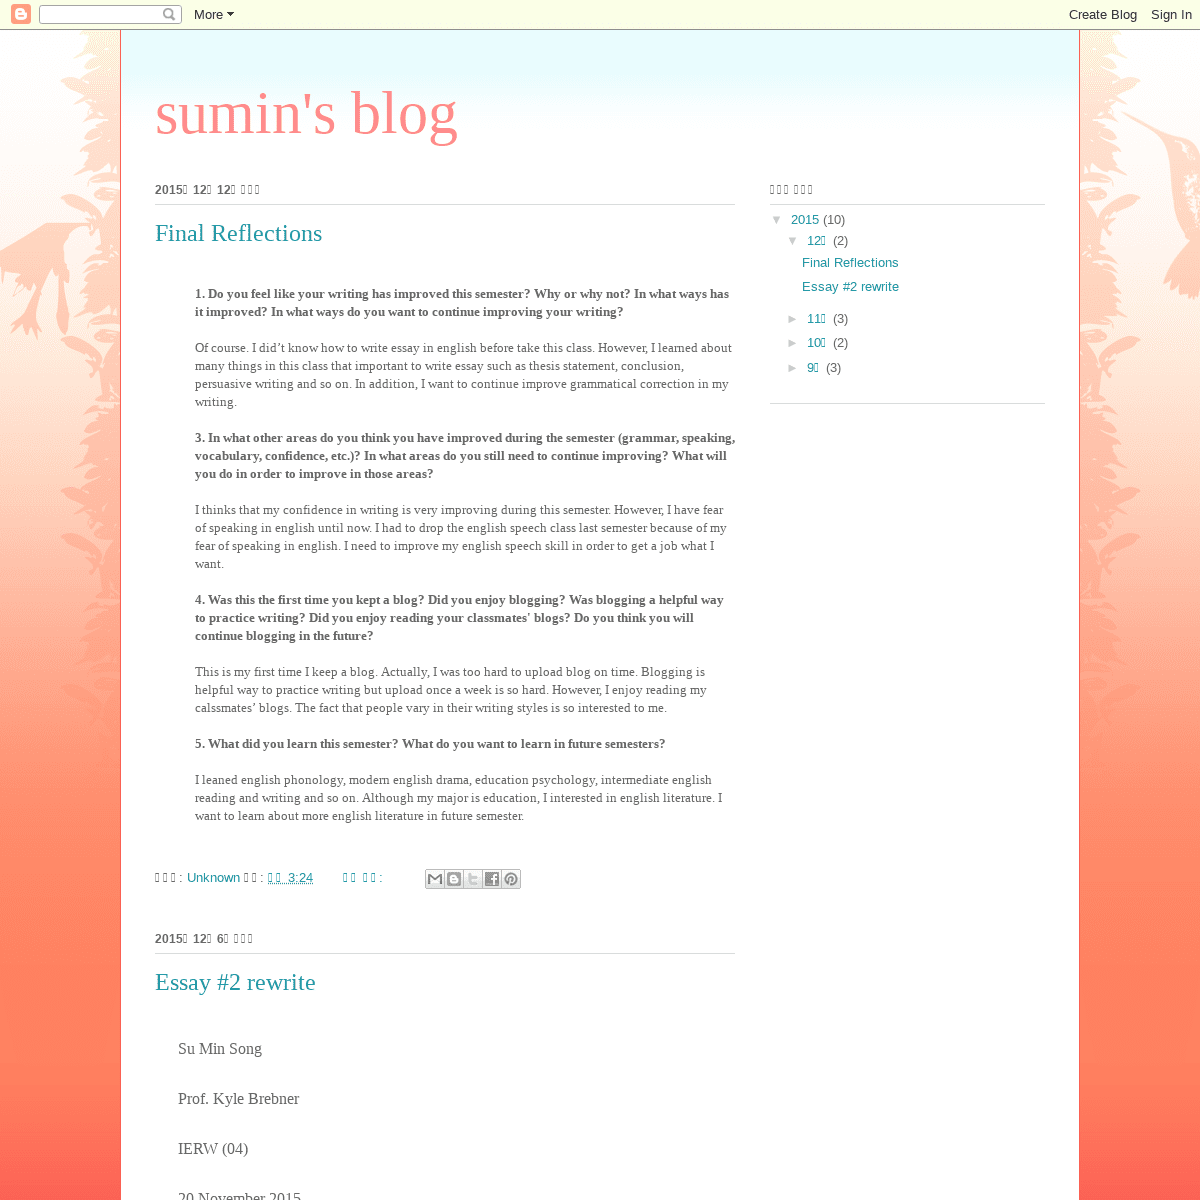 sumin's blog